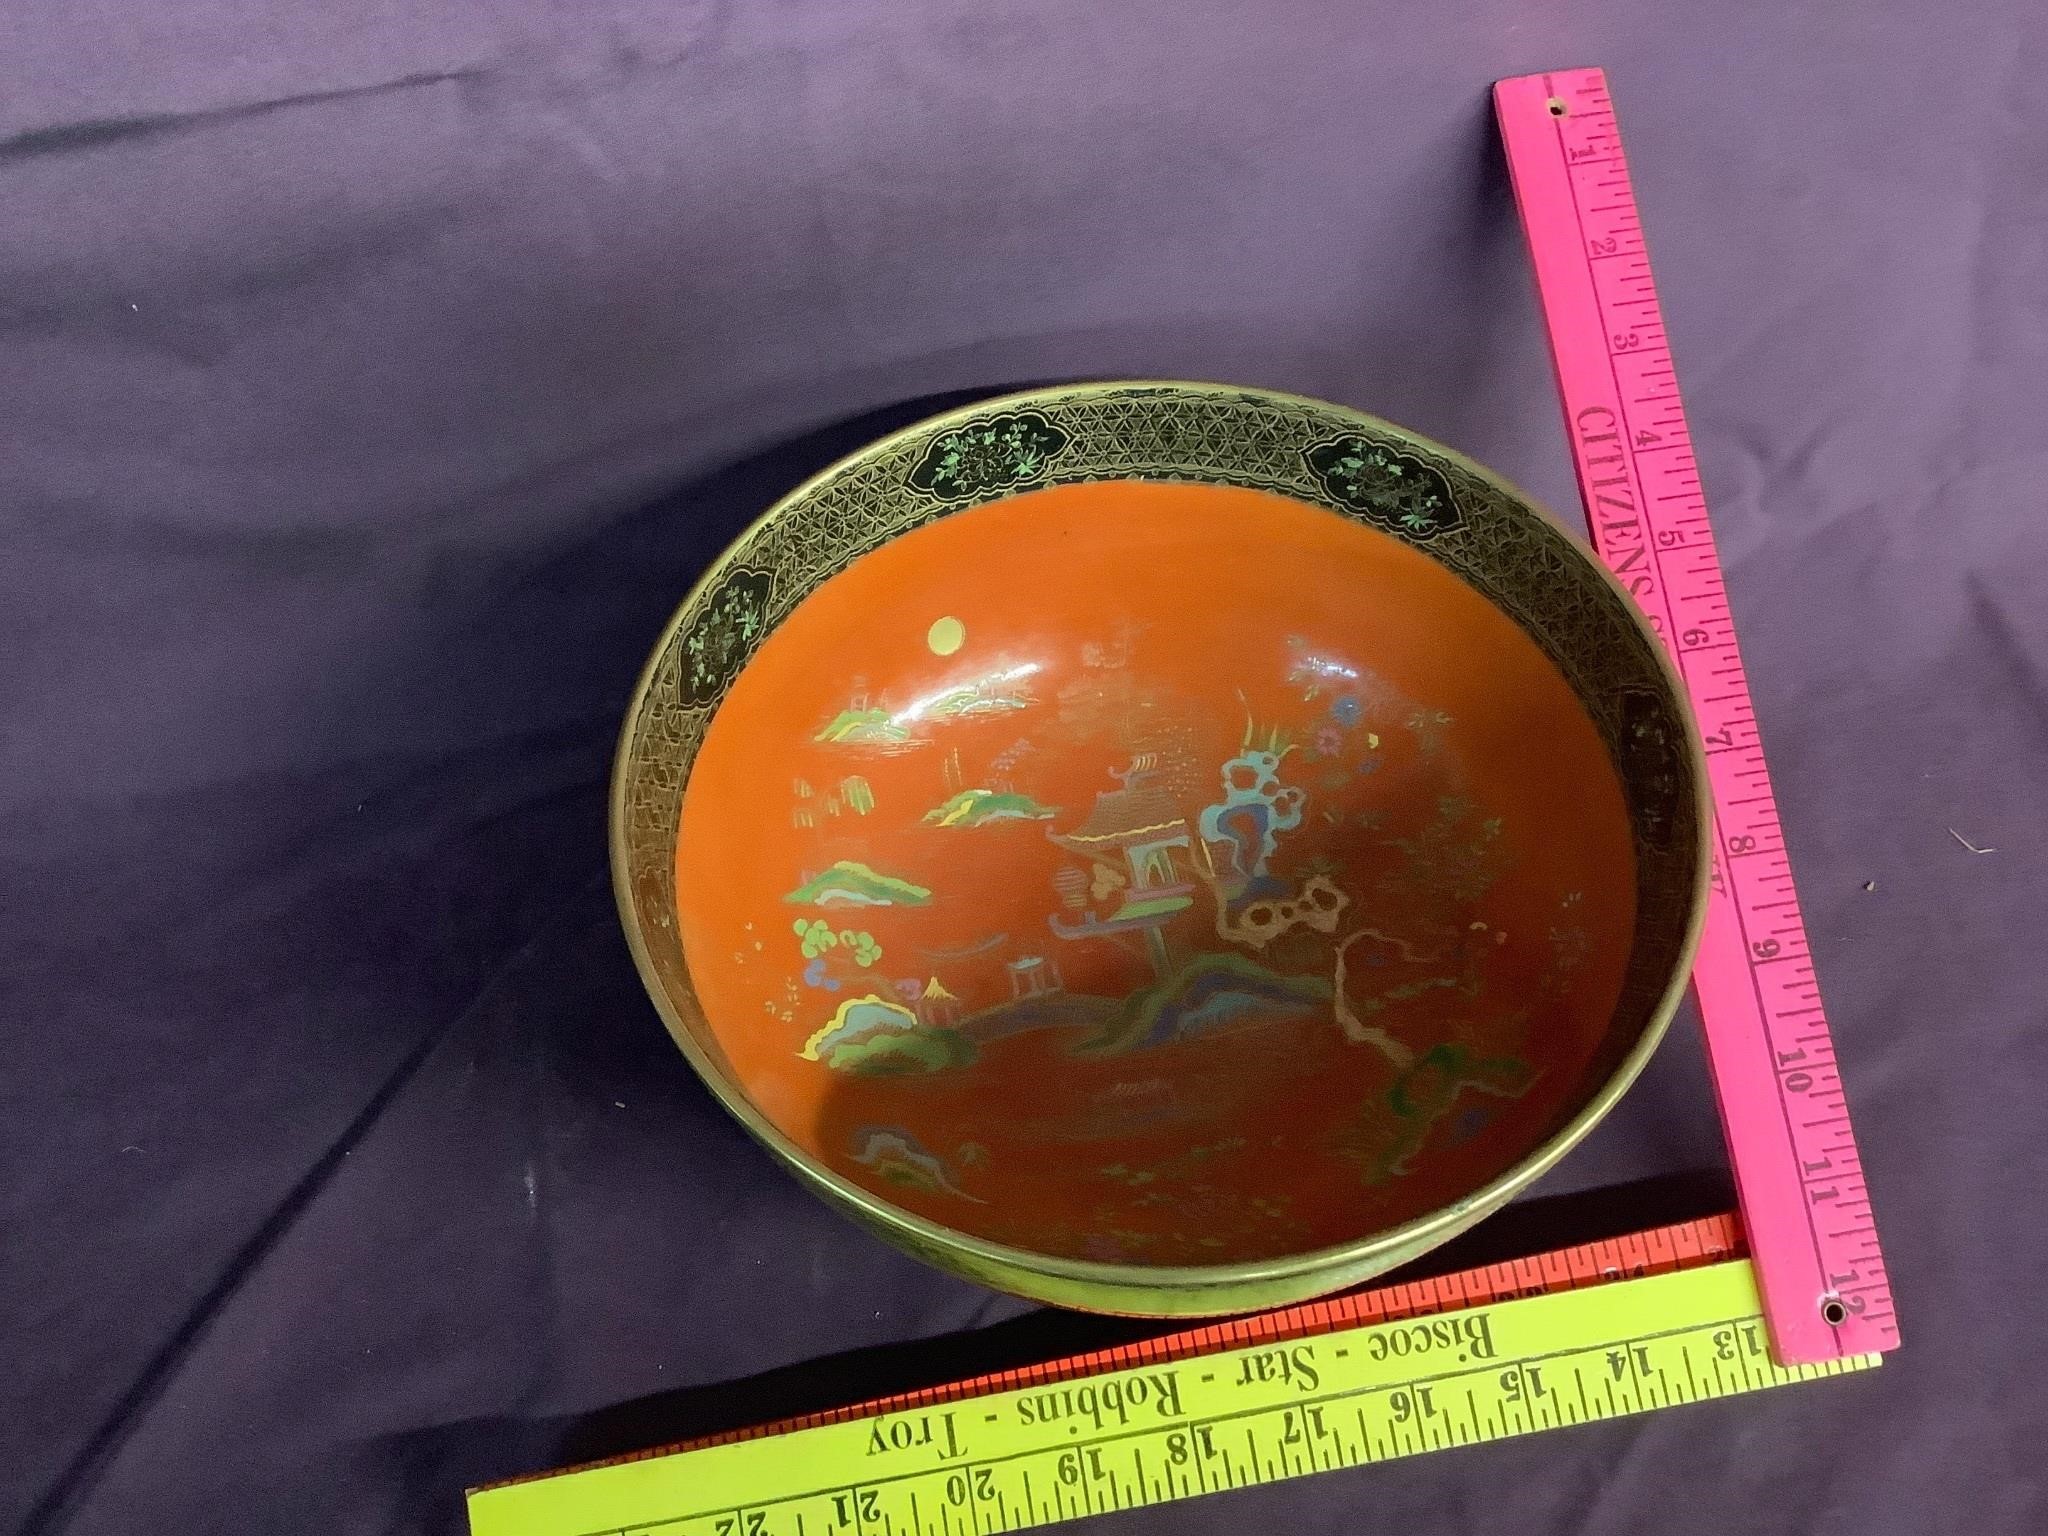 9” lawleys oriental bowl